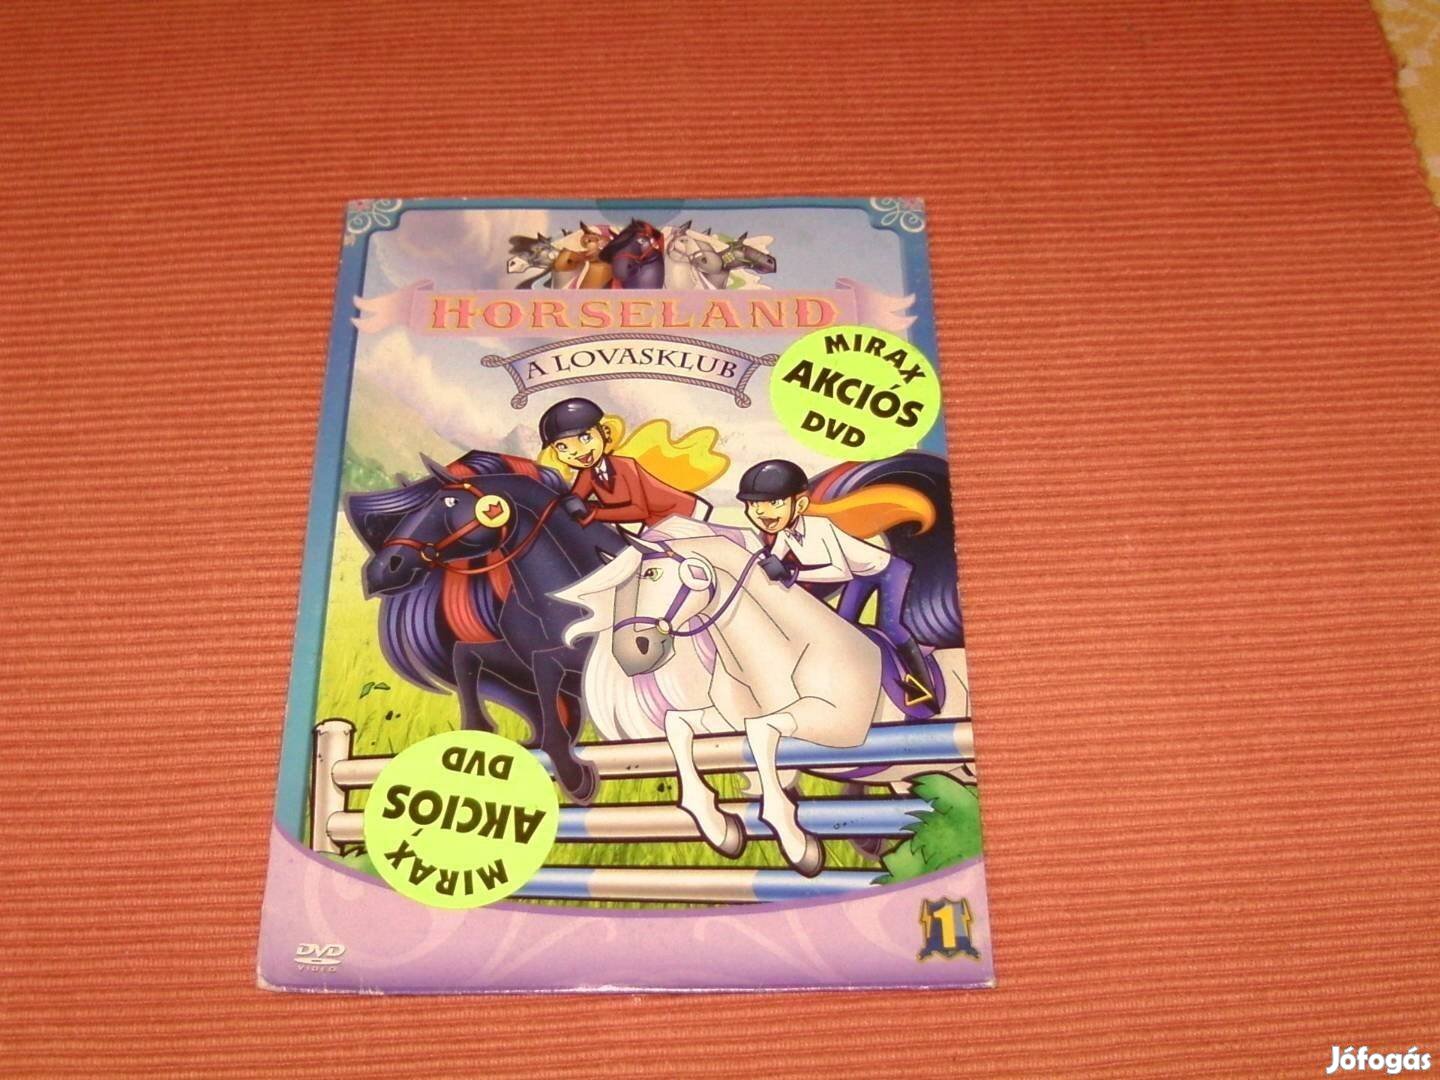 A lovasklub DVD játék